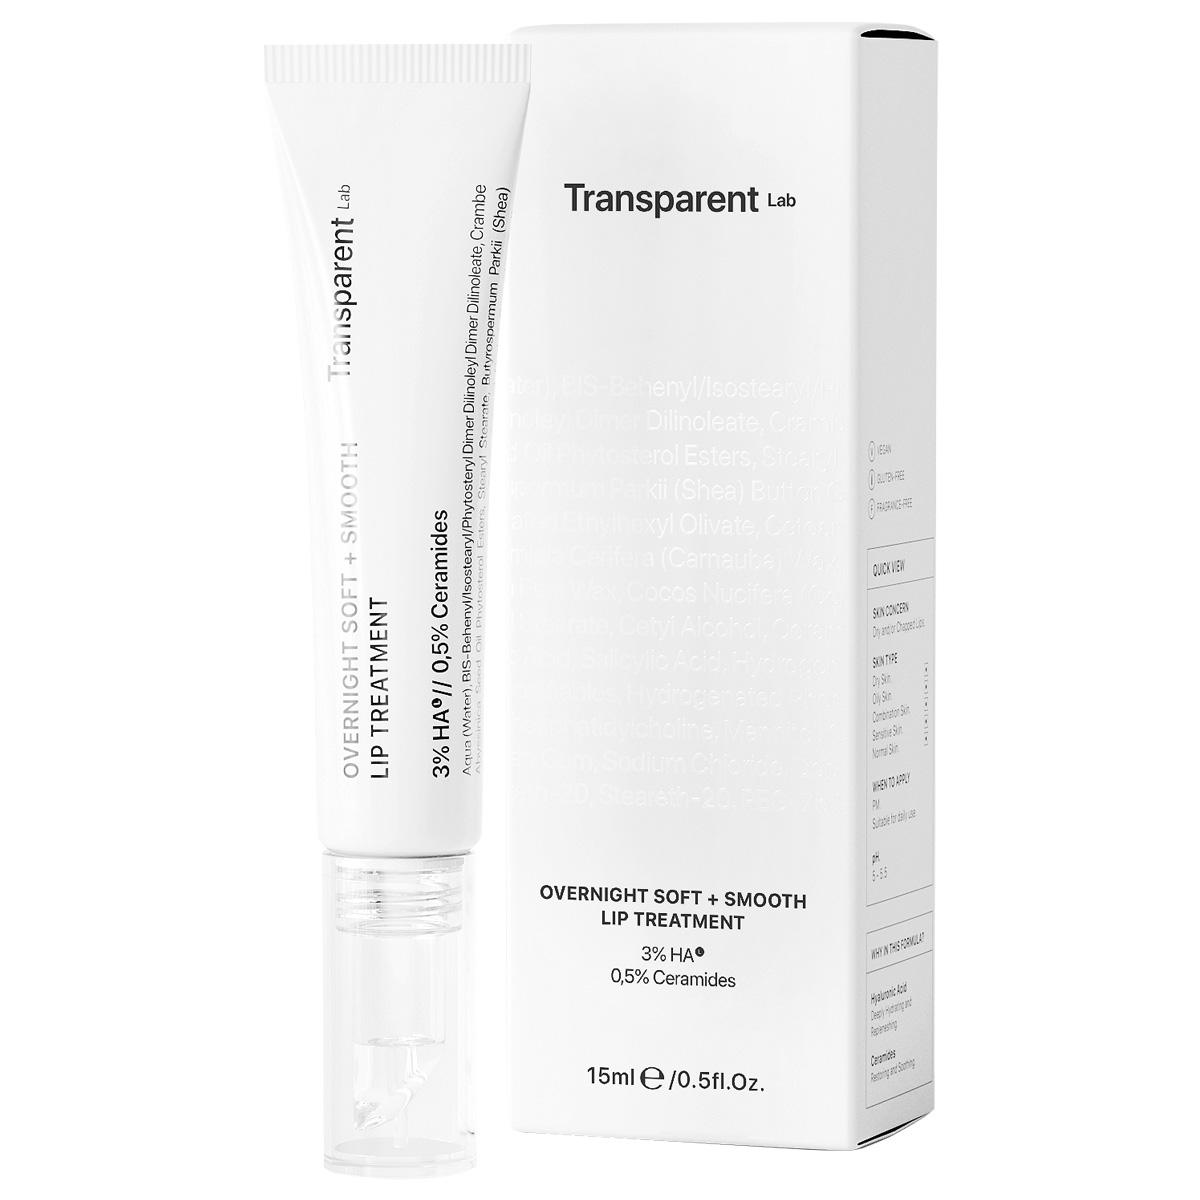 Transparent Lab Overnight Soft + Smooth Lip Treatment 15 ml - 2